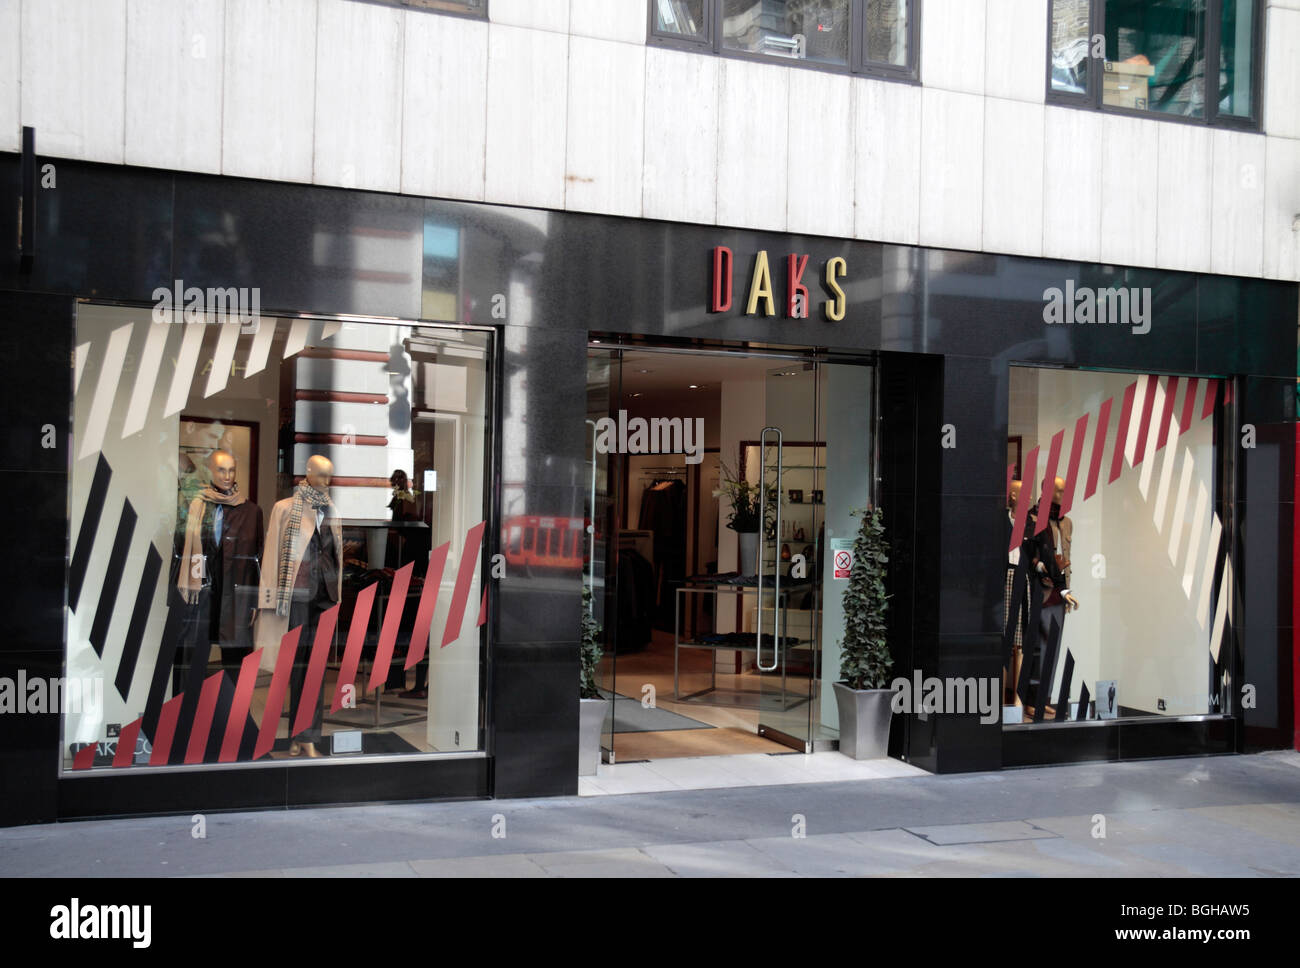 The shop front of Daks fashion clothing shop, Jermyn Street, Piccadilly, London, UK. Nov 2009 Stock Photo